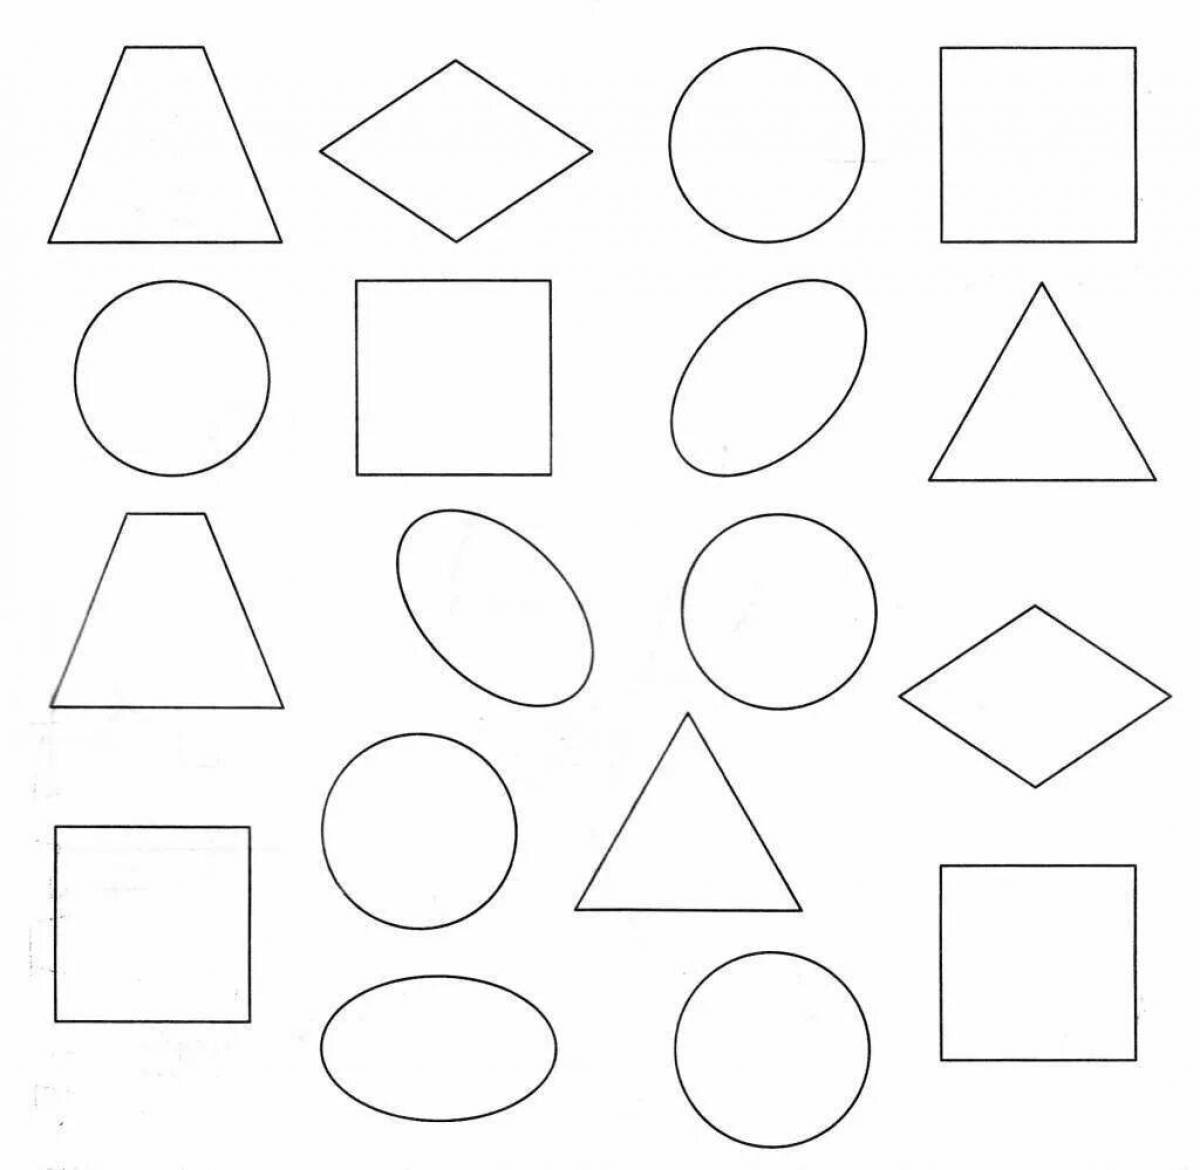 Colorful geometric shapes in kindergarten